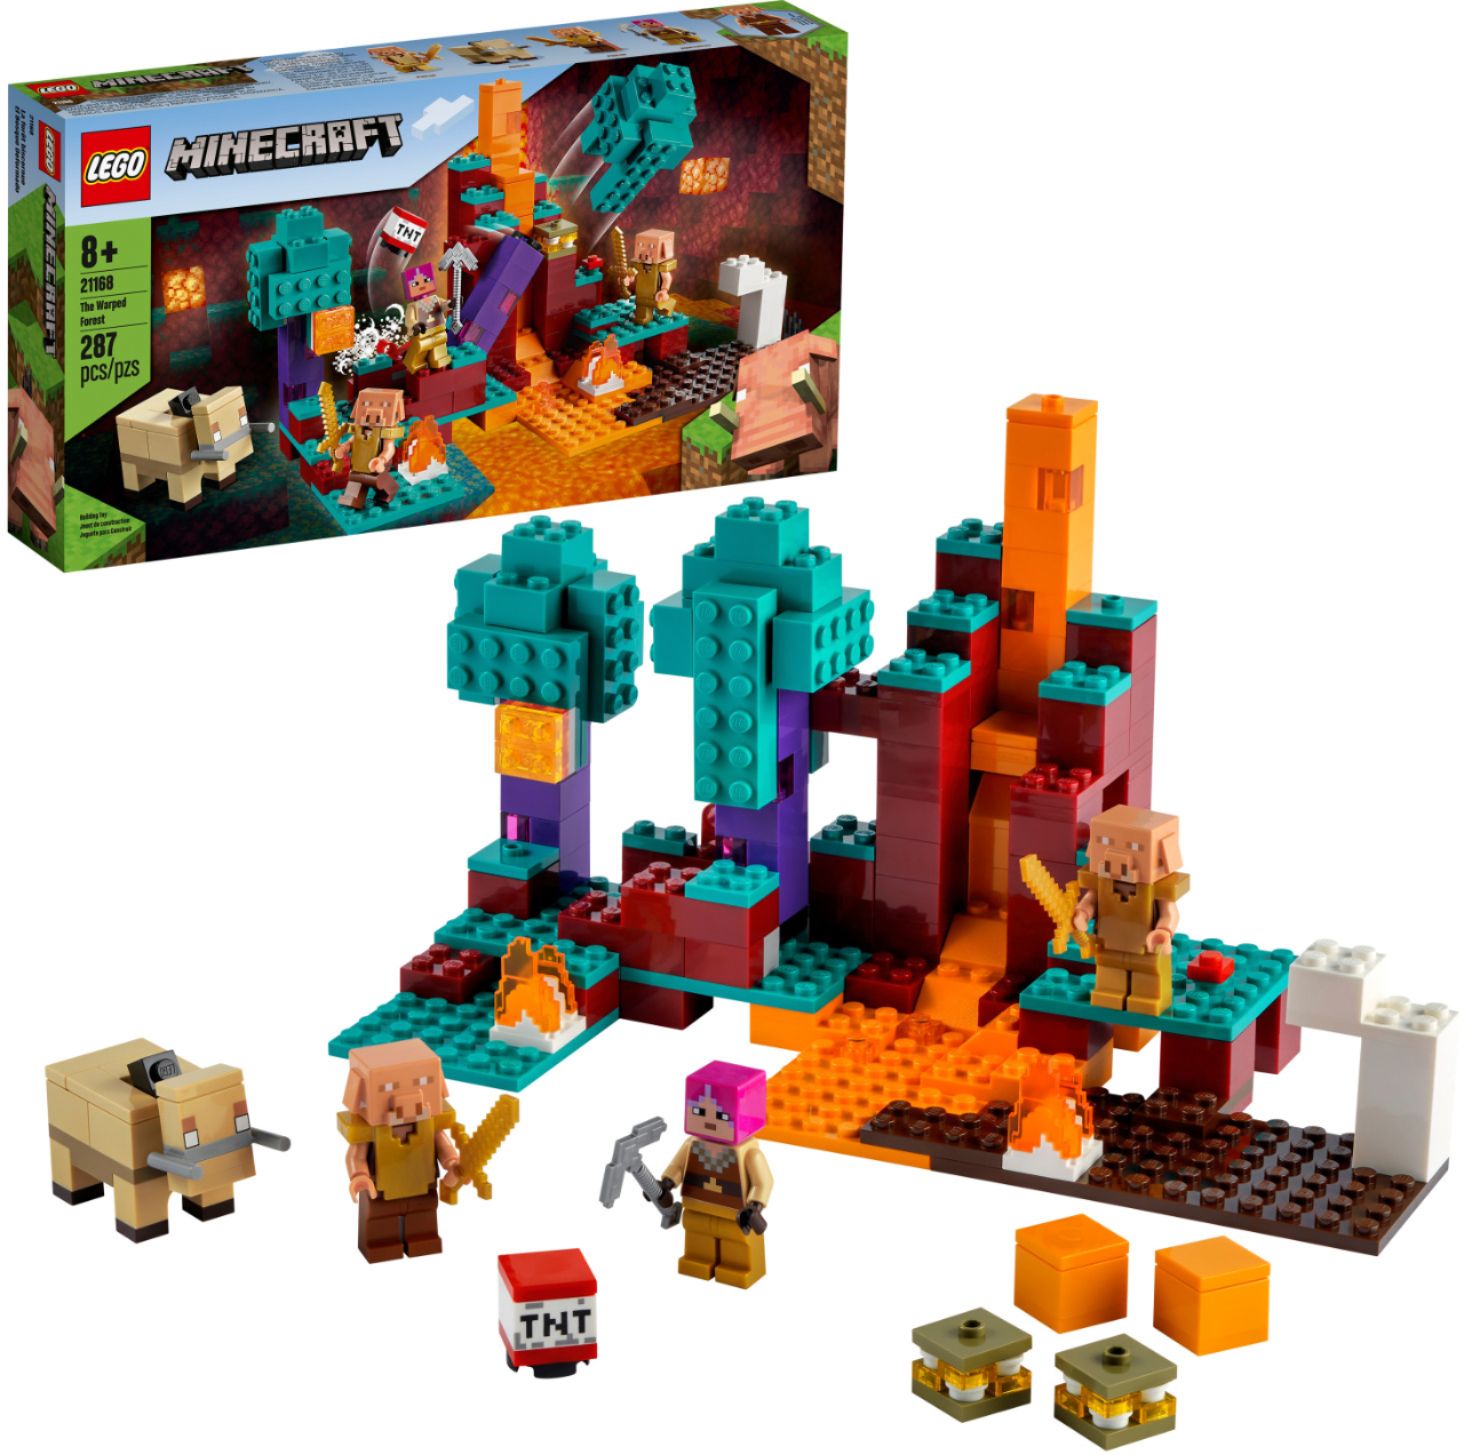 Der HANDELSPLATZ NEU & OVP + 21167 The Trading Post Lego® MINECRAFT™ + 